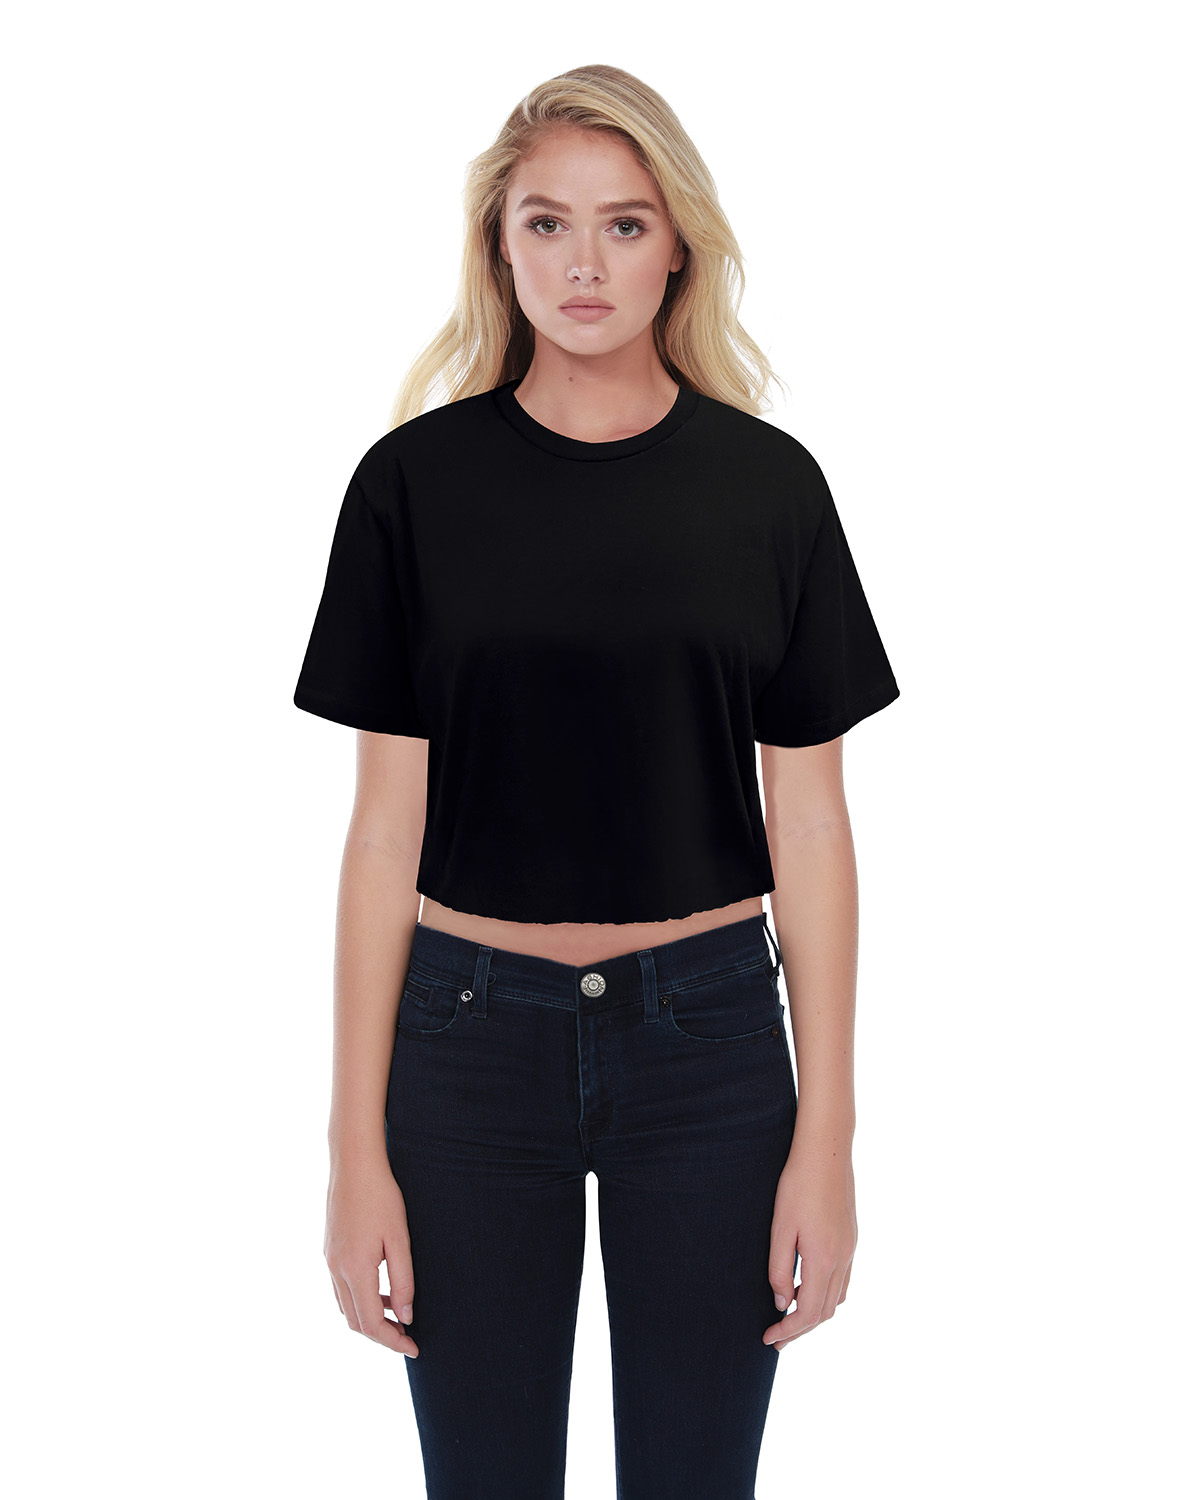 https://images.shirtspace.com/fullsize/g2eJgxSFviQybYCr485yNw%3D%3D/164069/9432-startee-st1110-ladies-boyfriend-crop-t-shirt-front-black.jpg